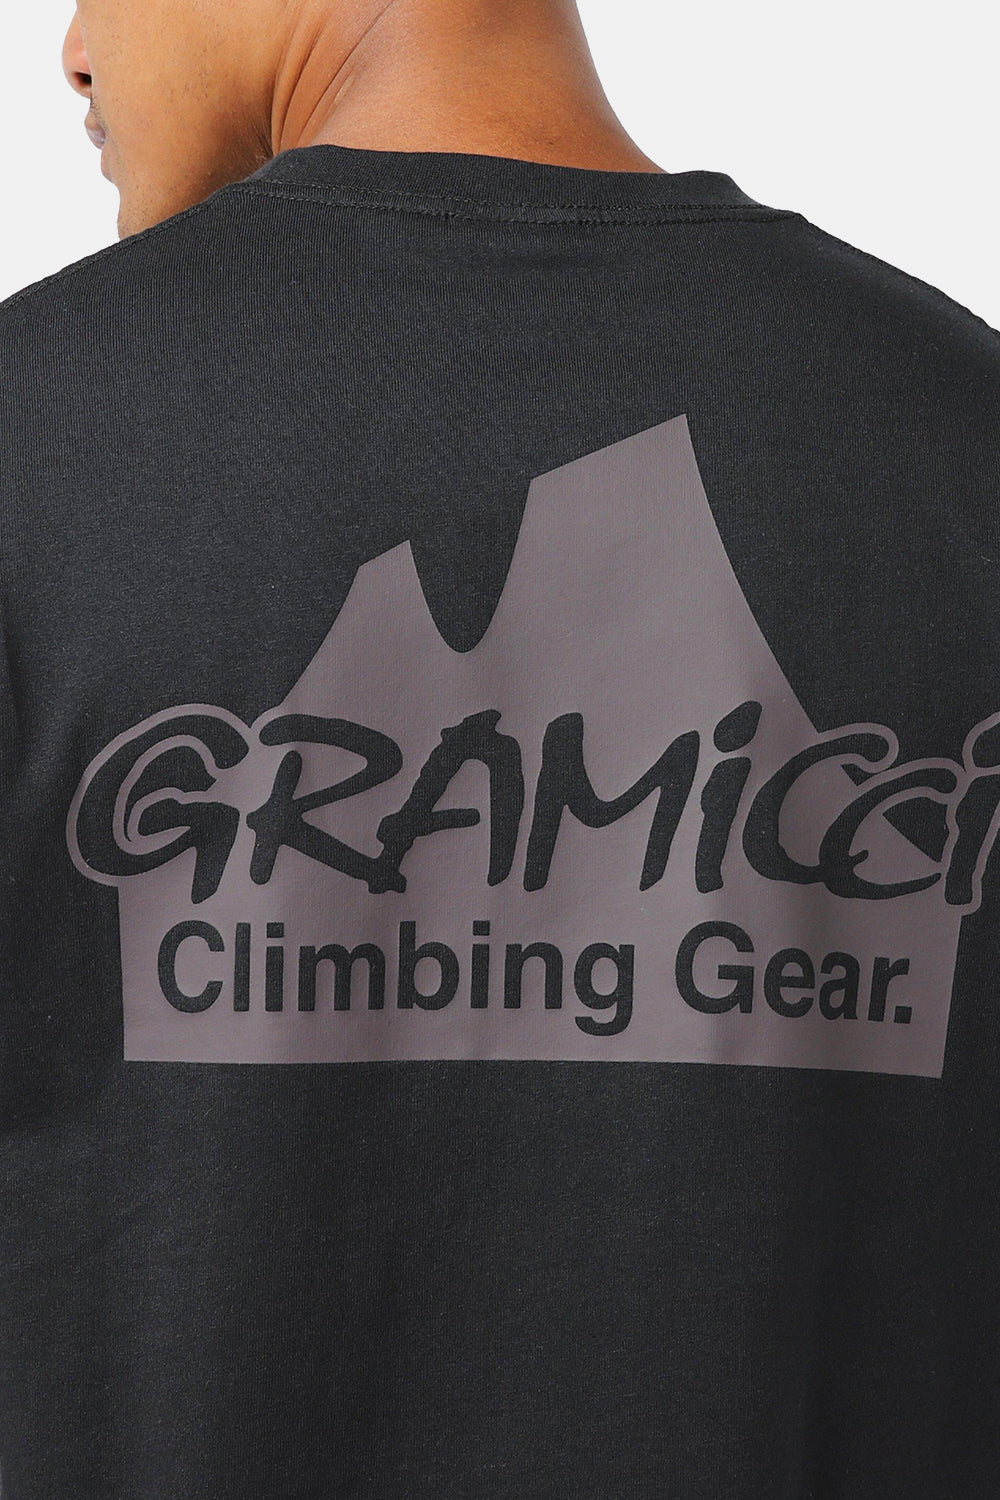 Gramicci Climbing Gear T-Shirt (Vintage Black)